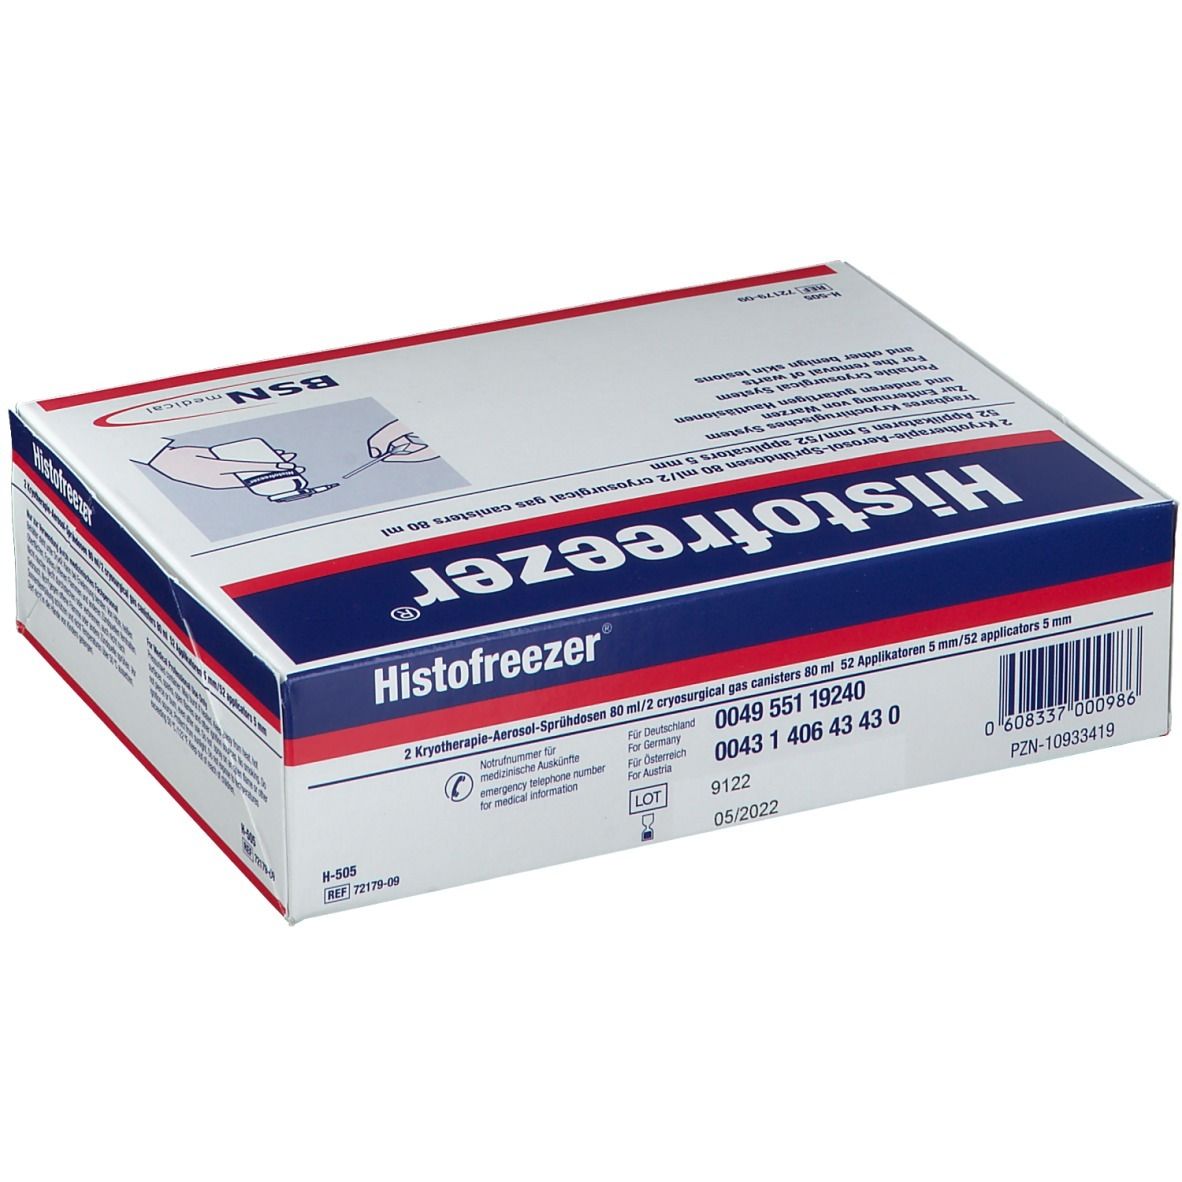 Histofreezer® medium 5 mm